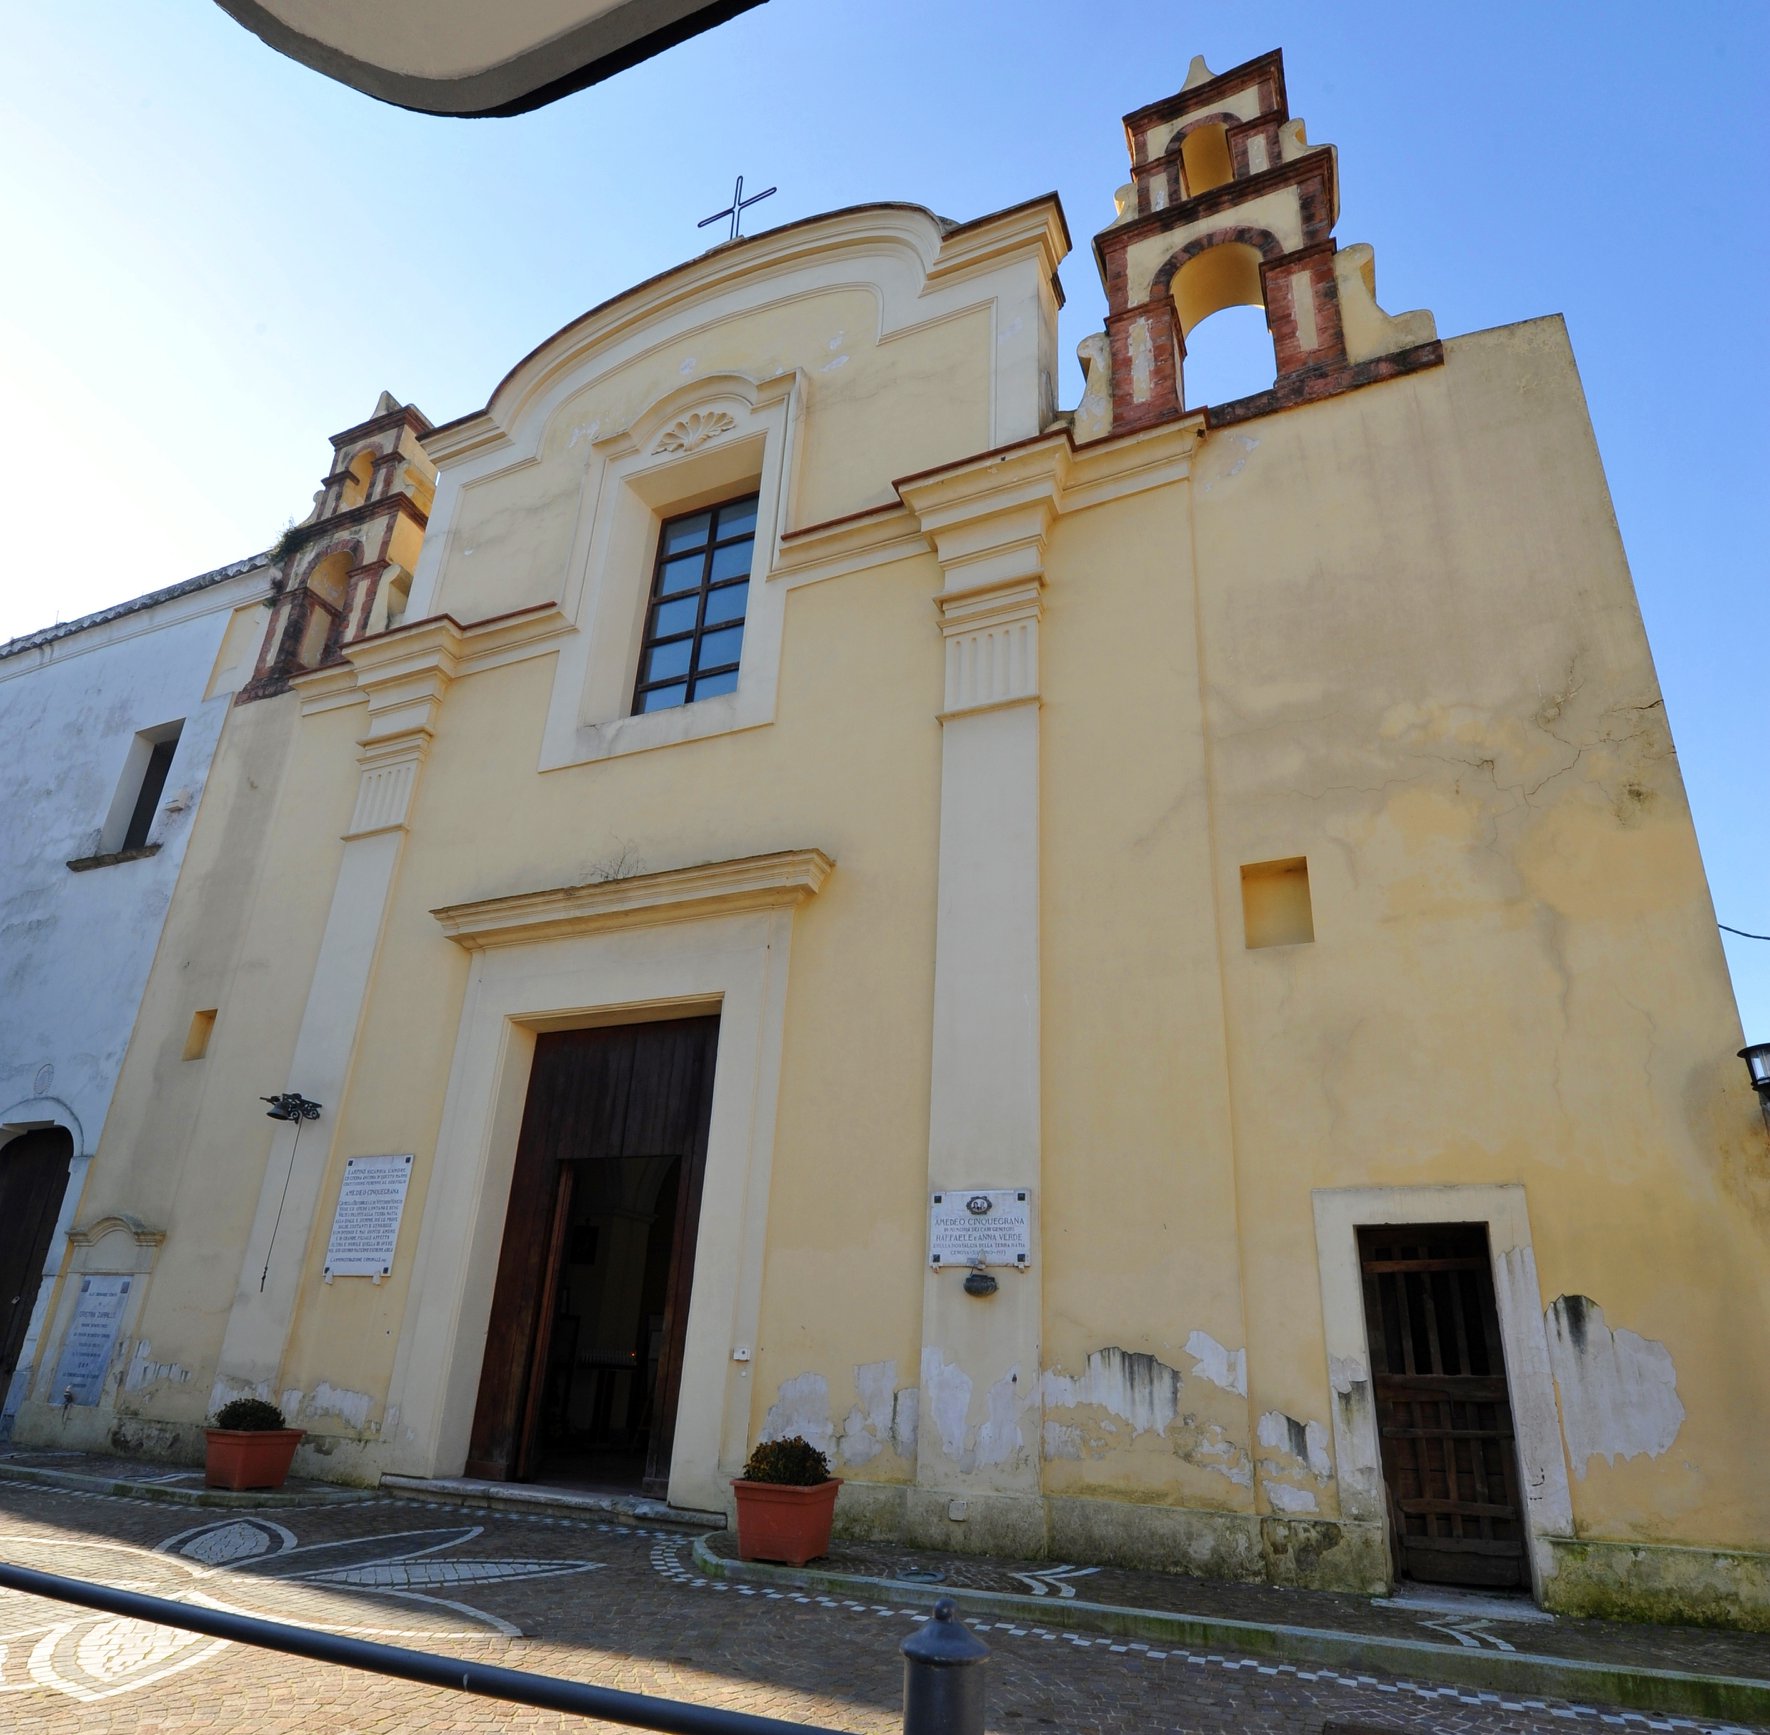 Chiesa di San Francesco da Paola (chiesa, cimiteriale) - Sant'Arpino (CE)  (XVII)